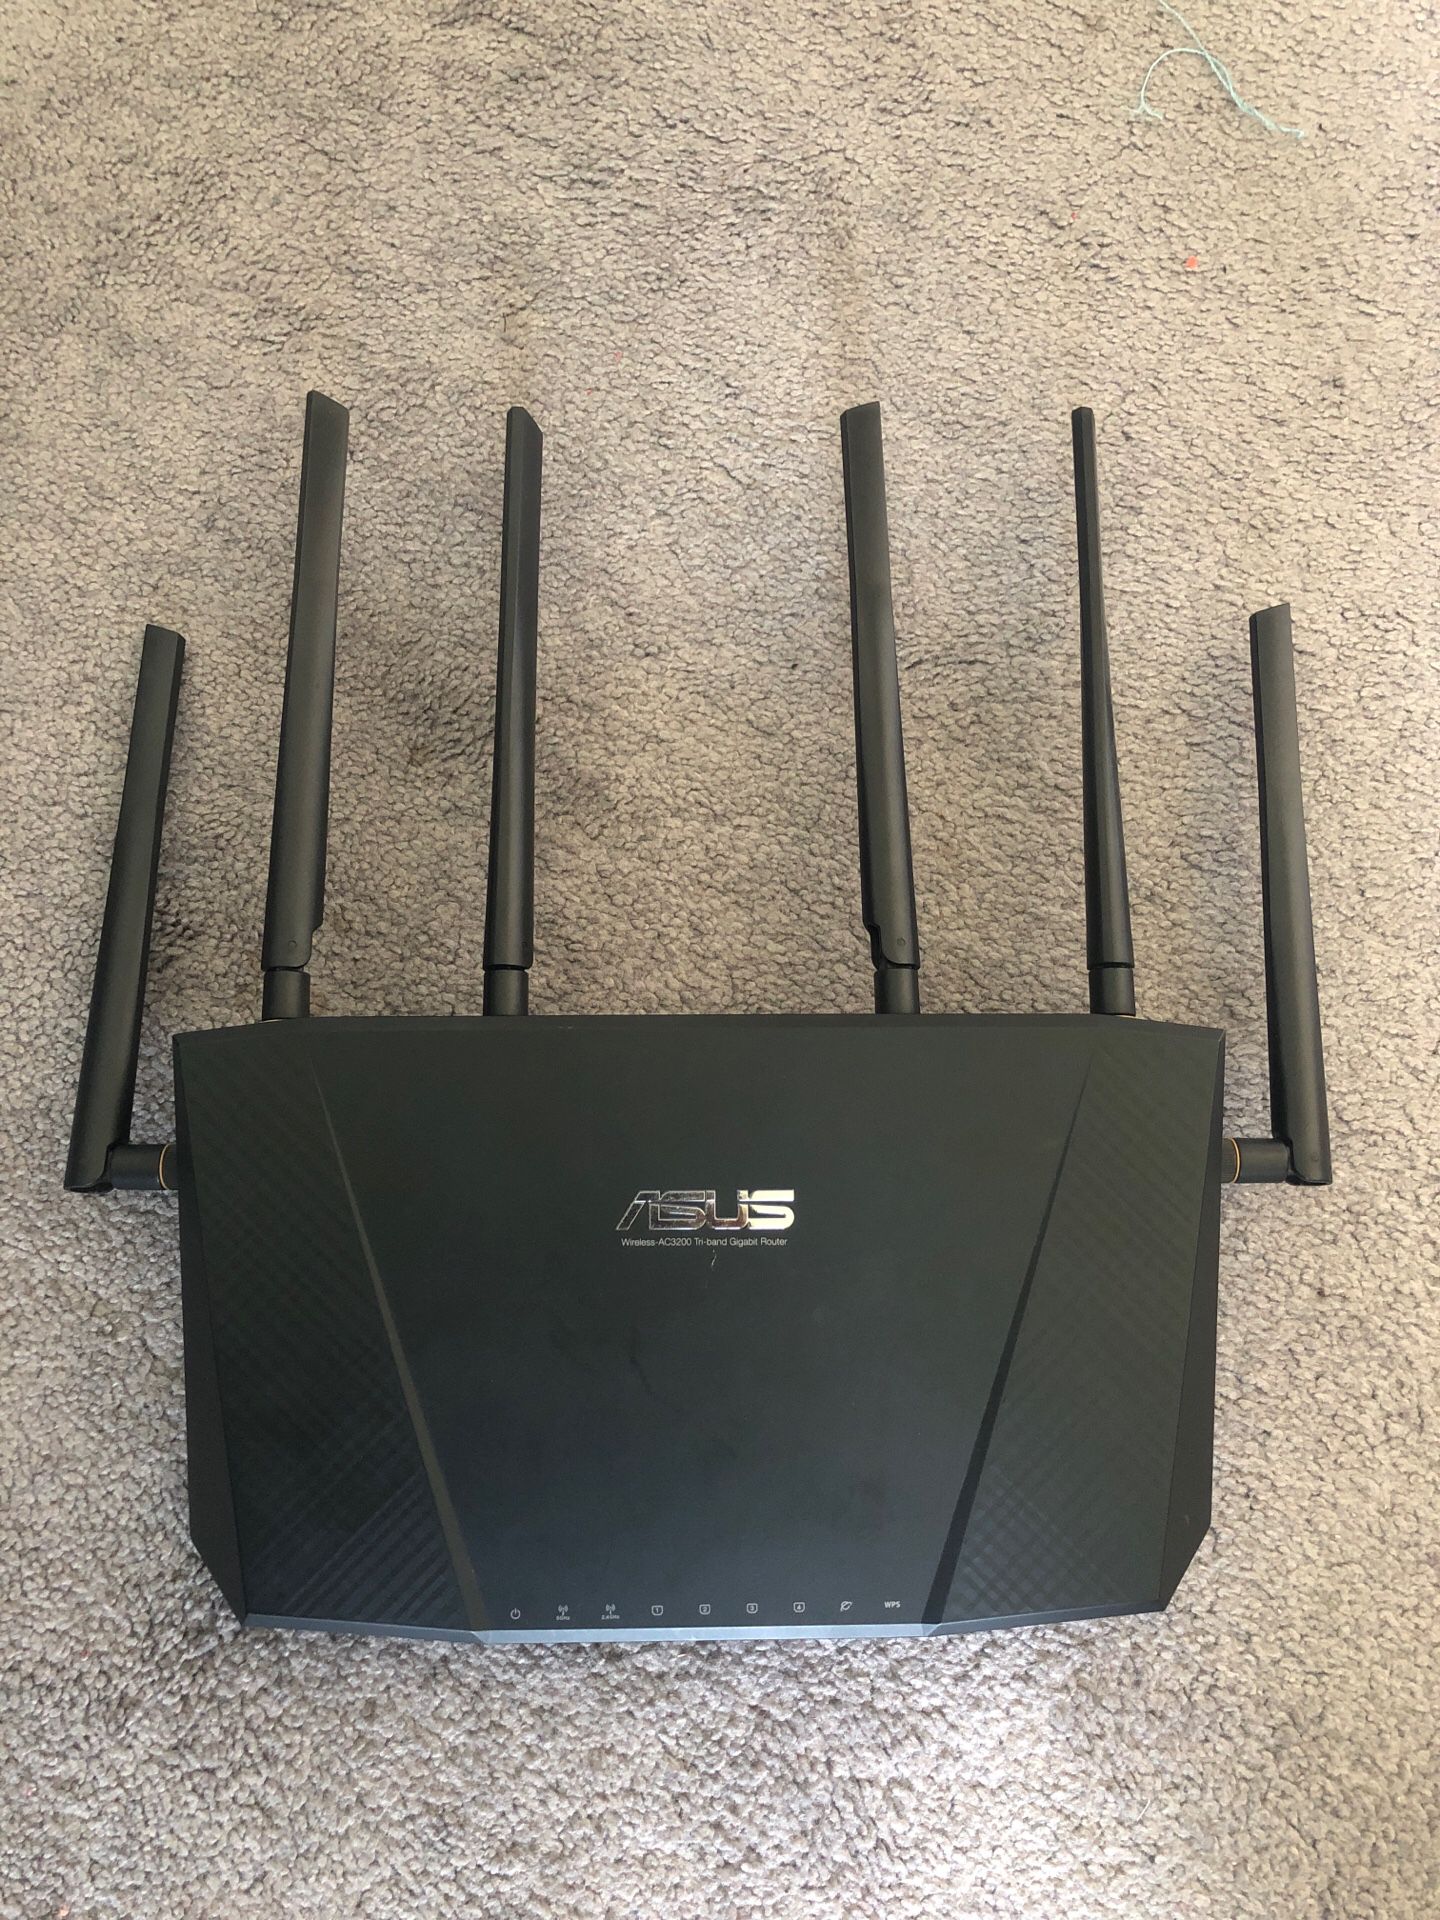 ASUS AC-3200 Tri-band Gigabit Router